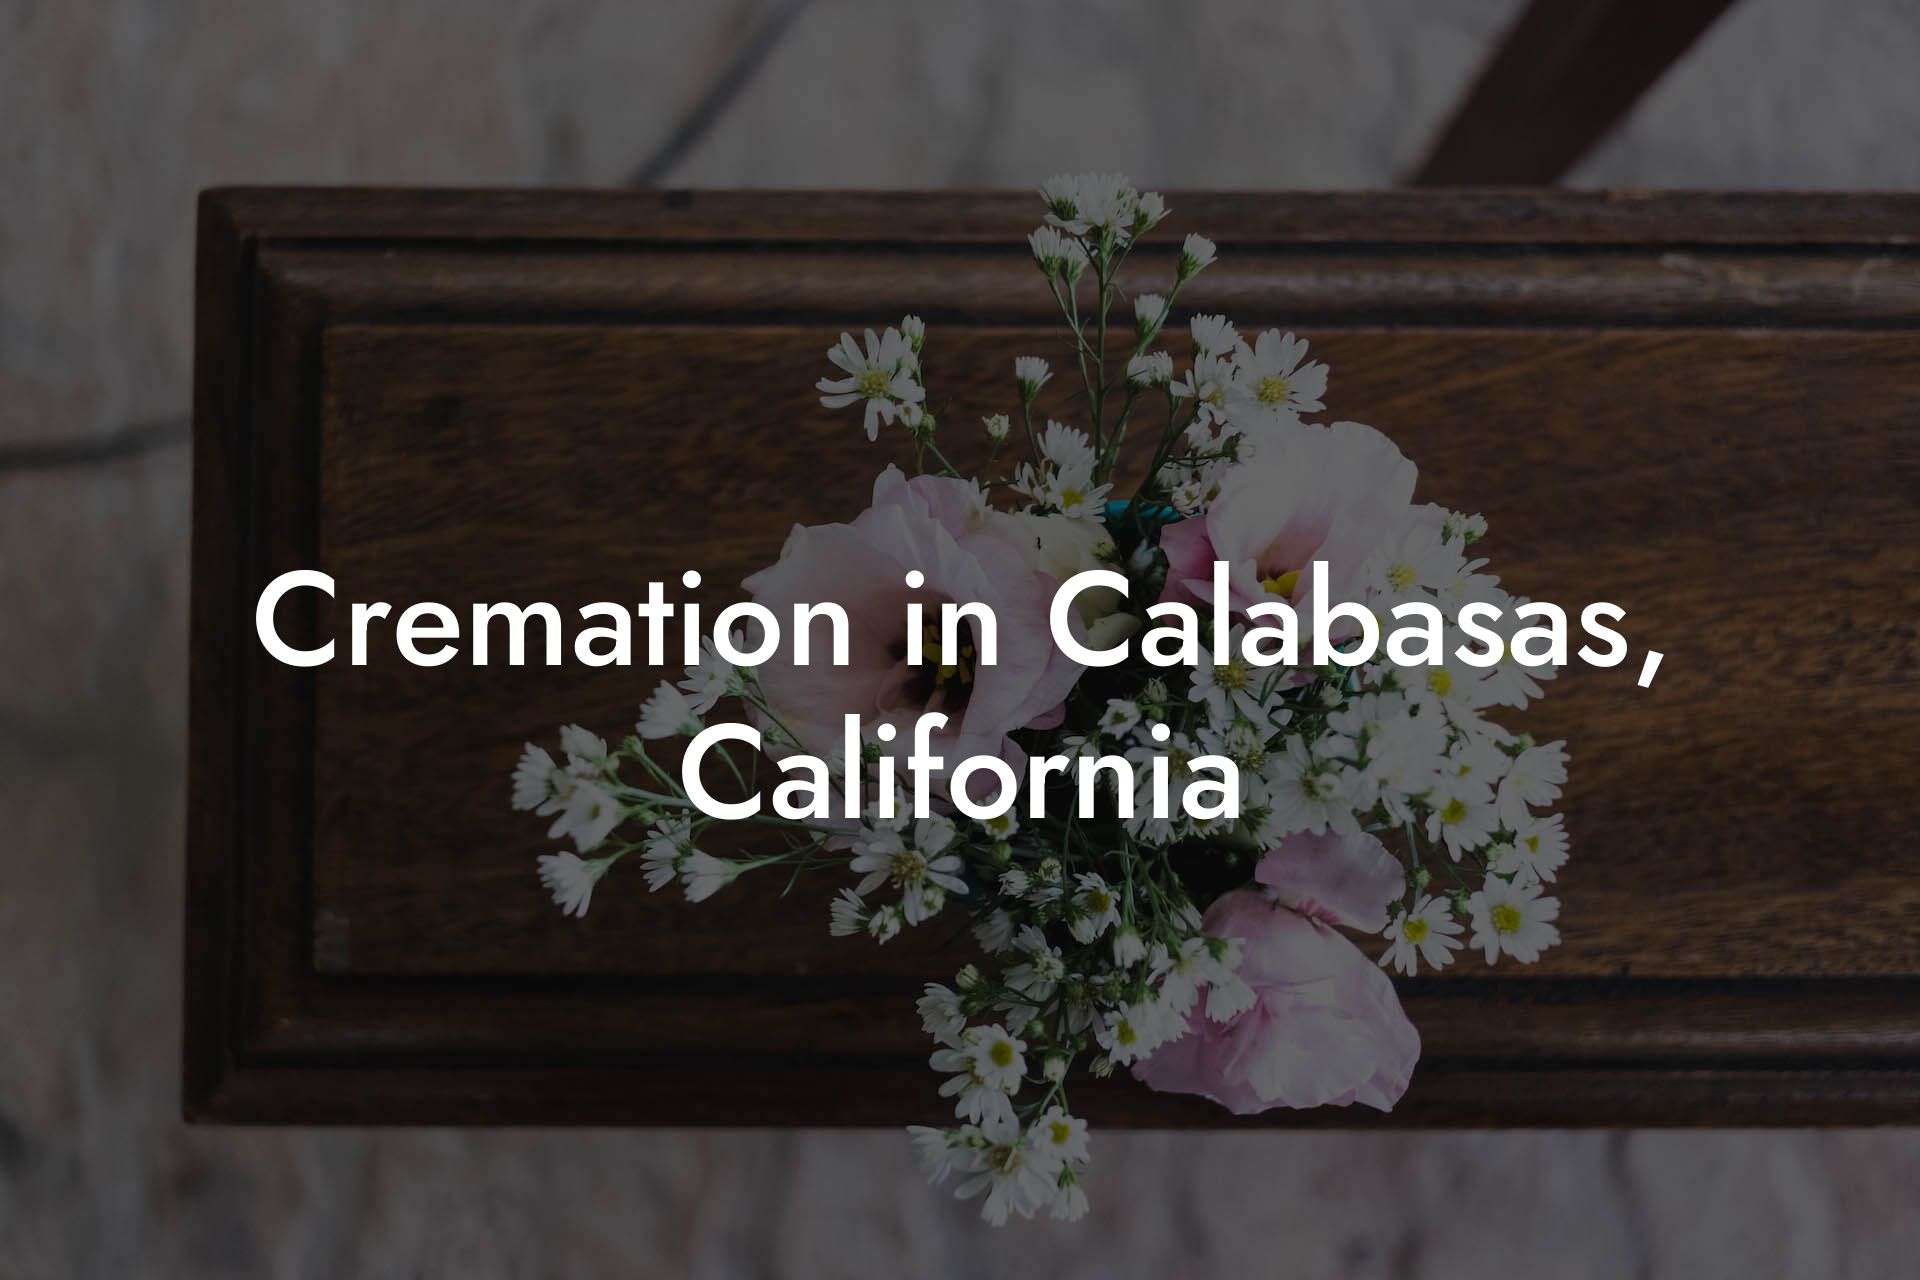 Cremation in Calabasas, California